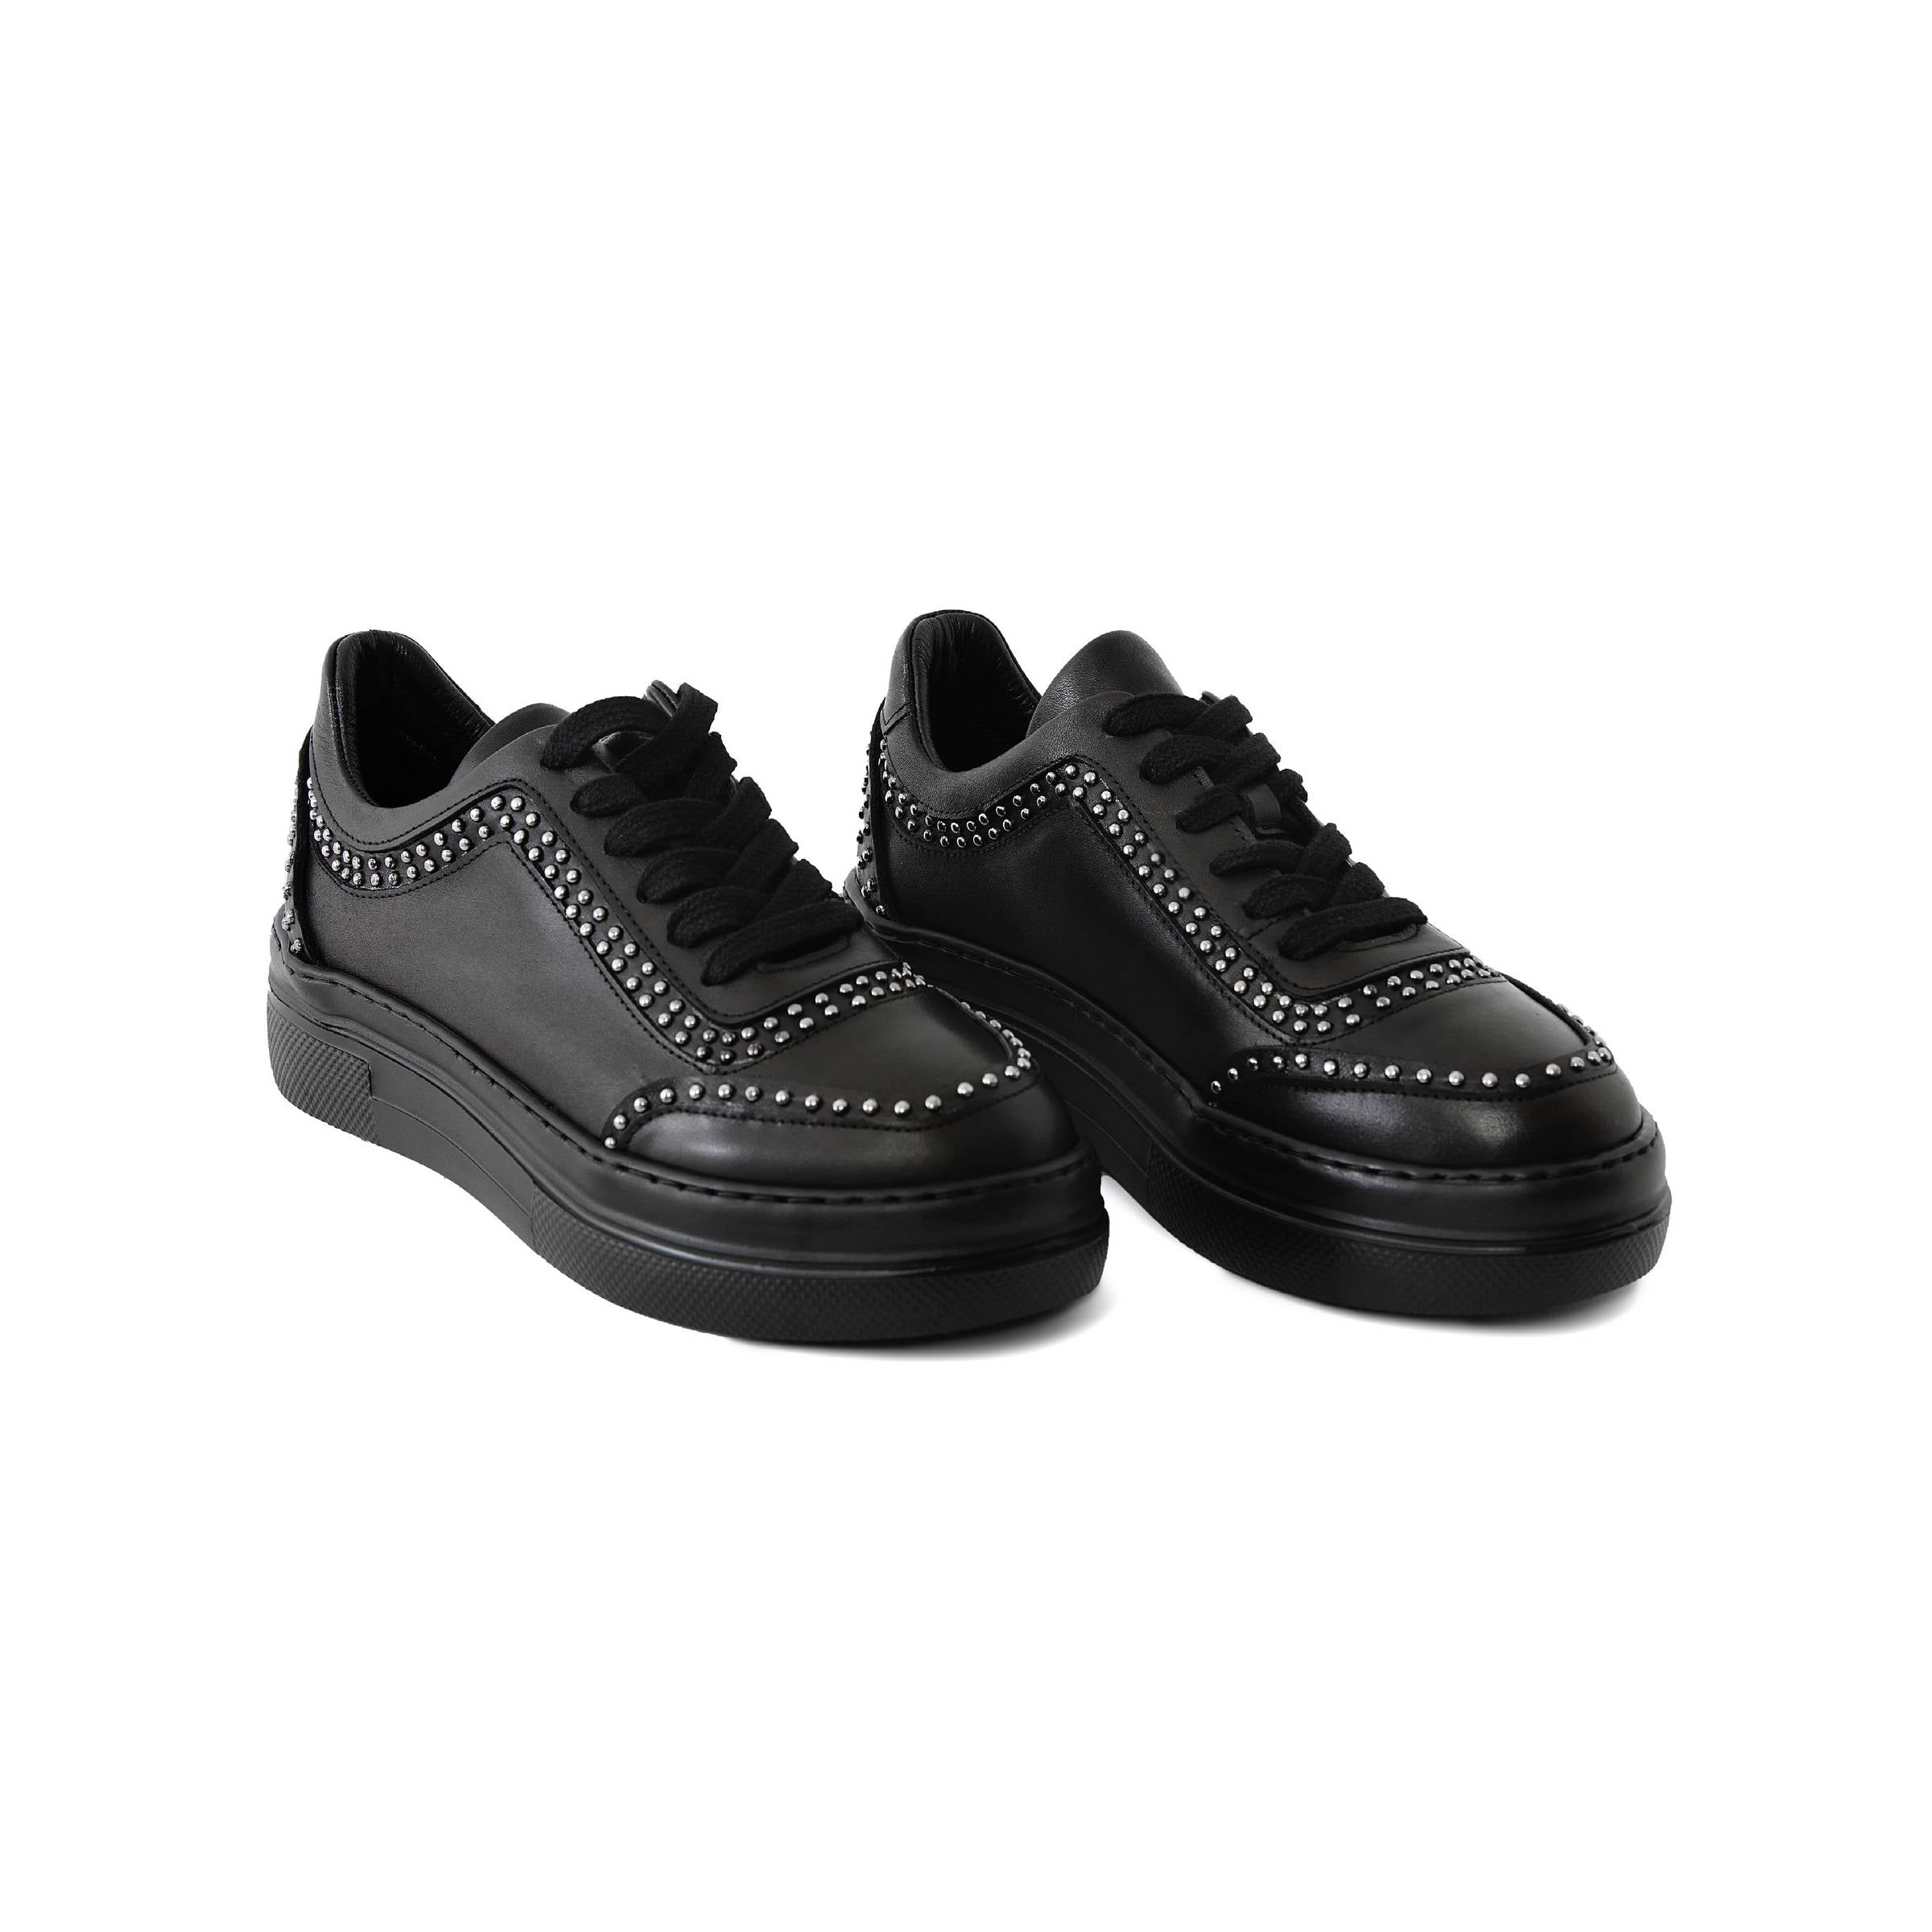 Women's Metisse Leather Handmade Sneakers W5005